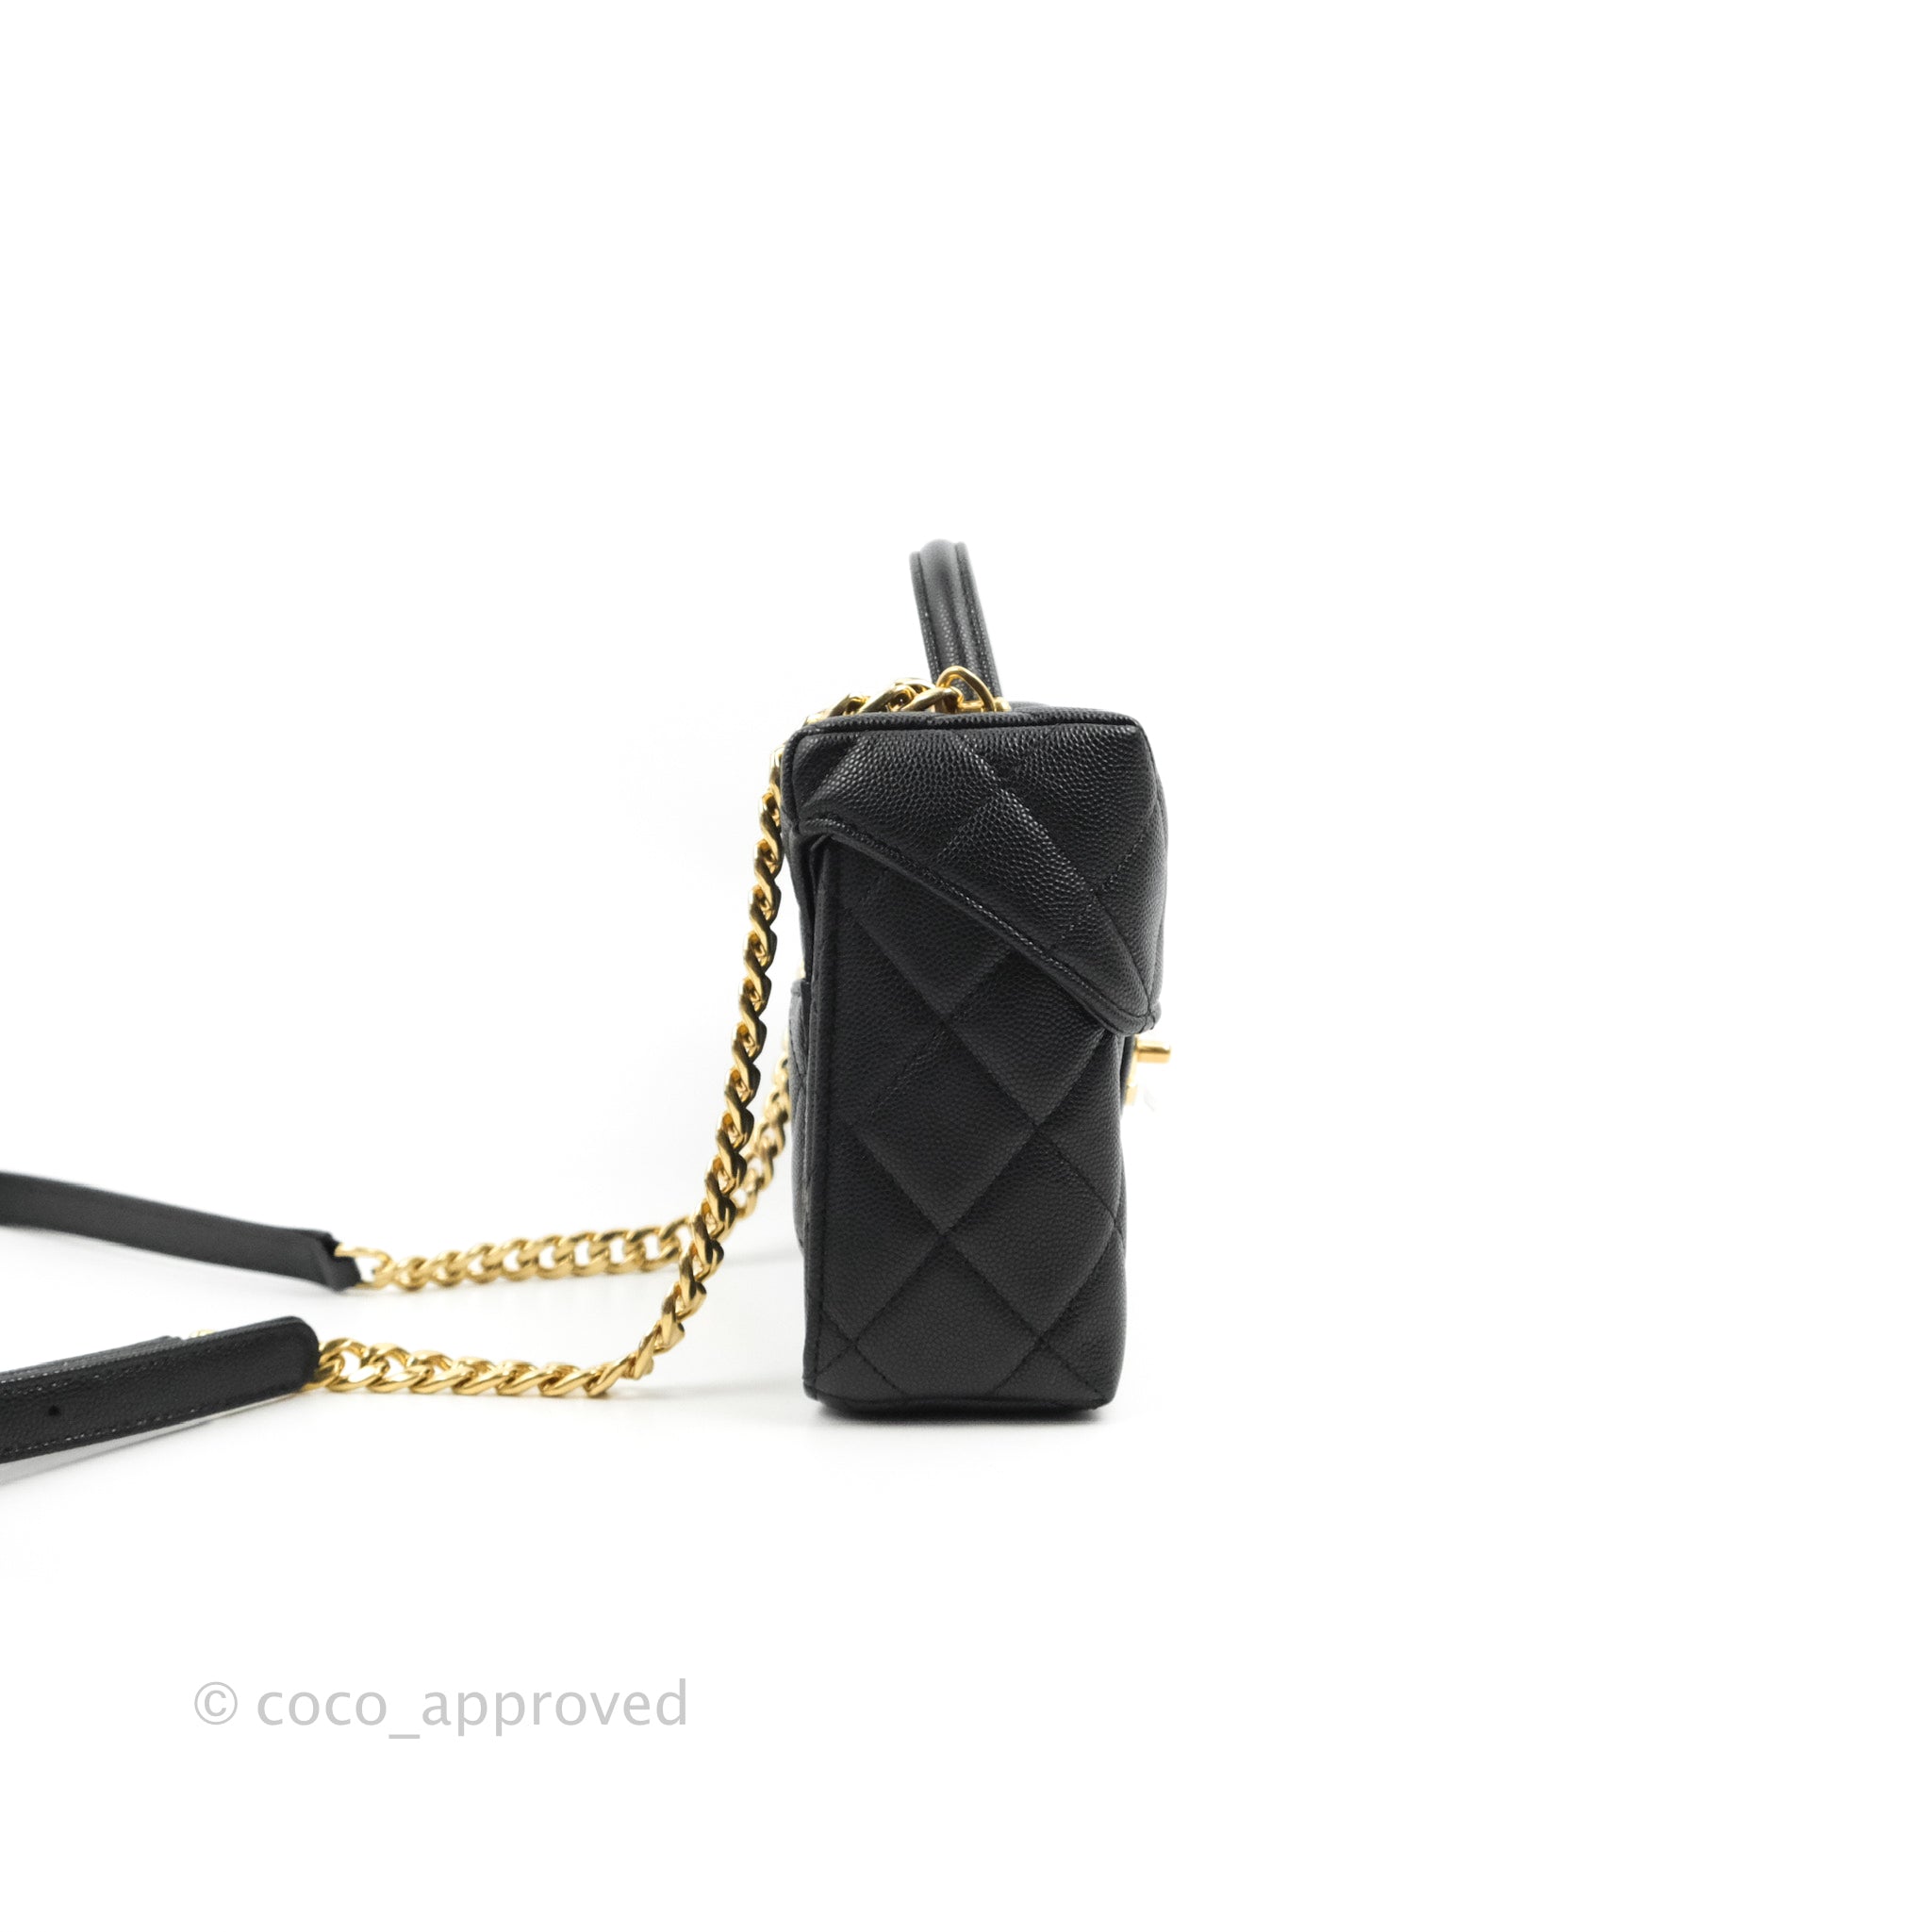 Chanel O Mini Bag Lambskin Imitation Pearls & Gold-Tone Metal Black